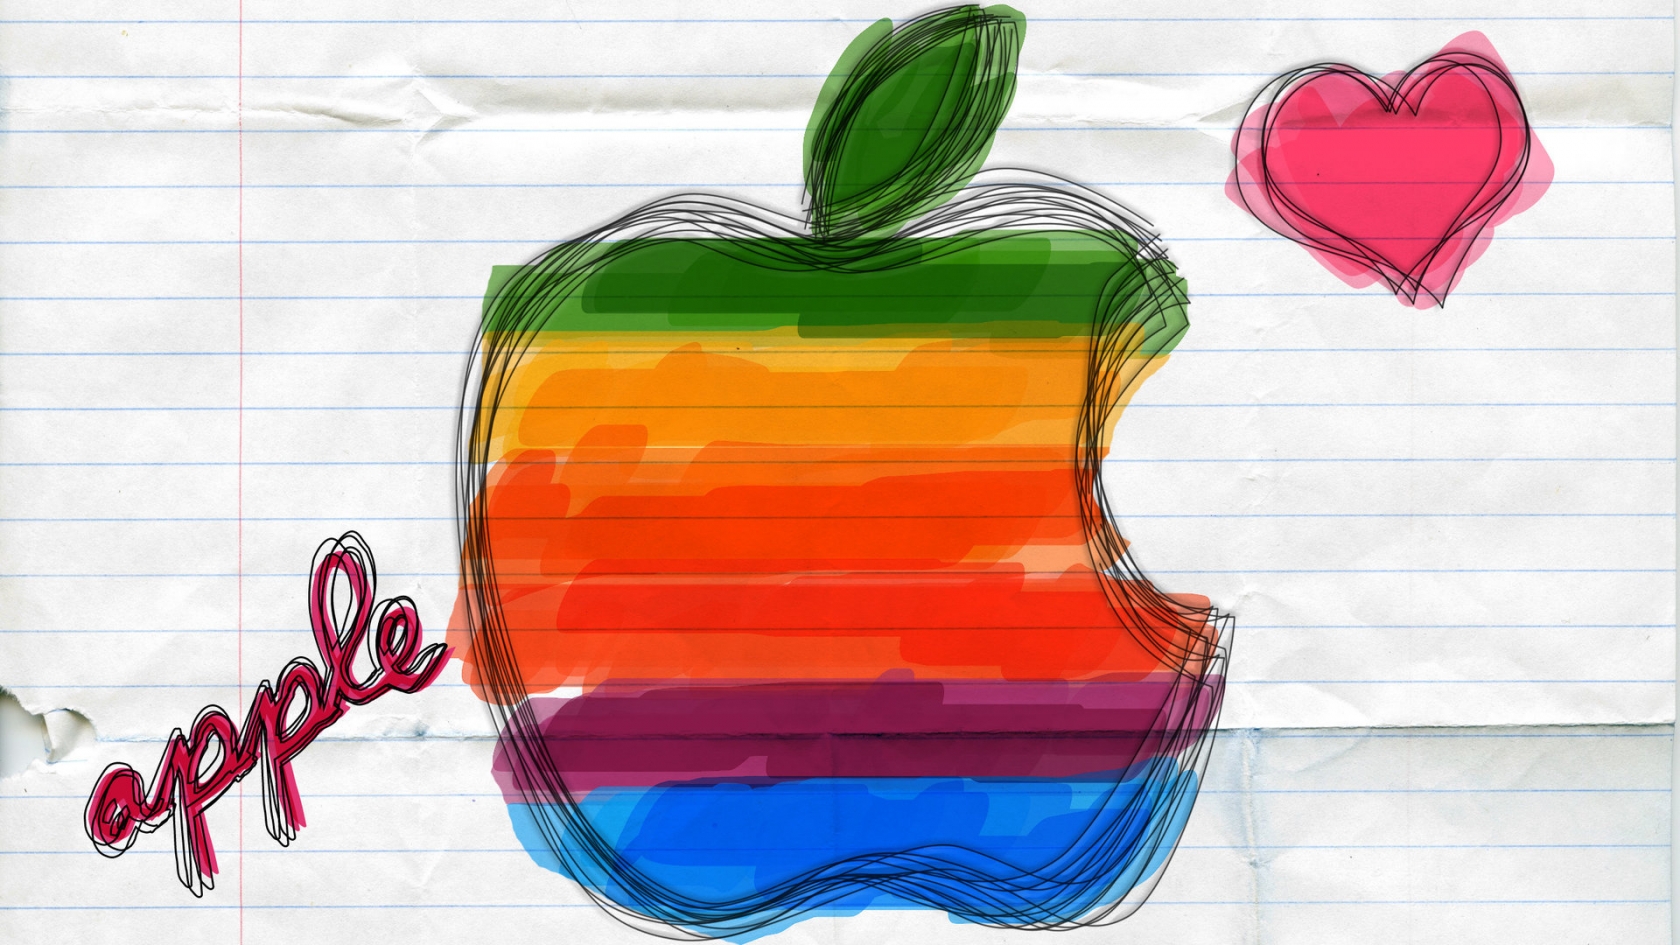 Colourful Apple logo for 1680 x 945 HDTV resolution